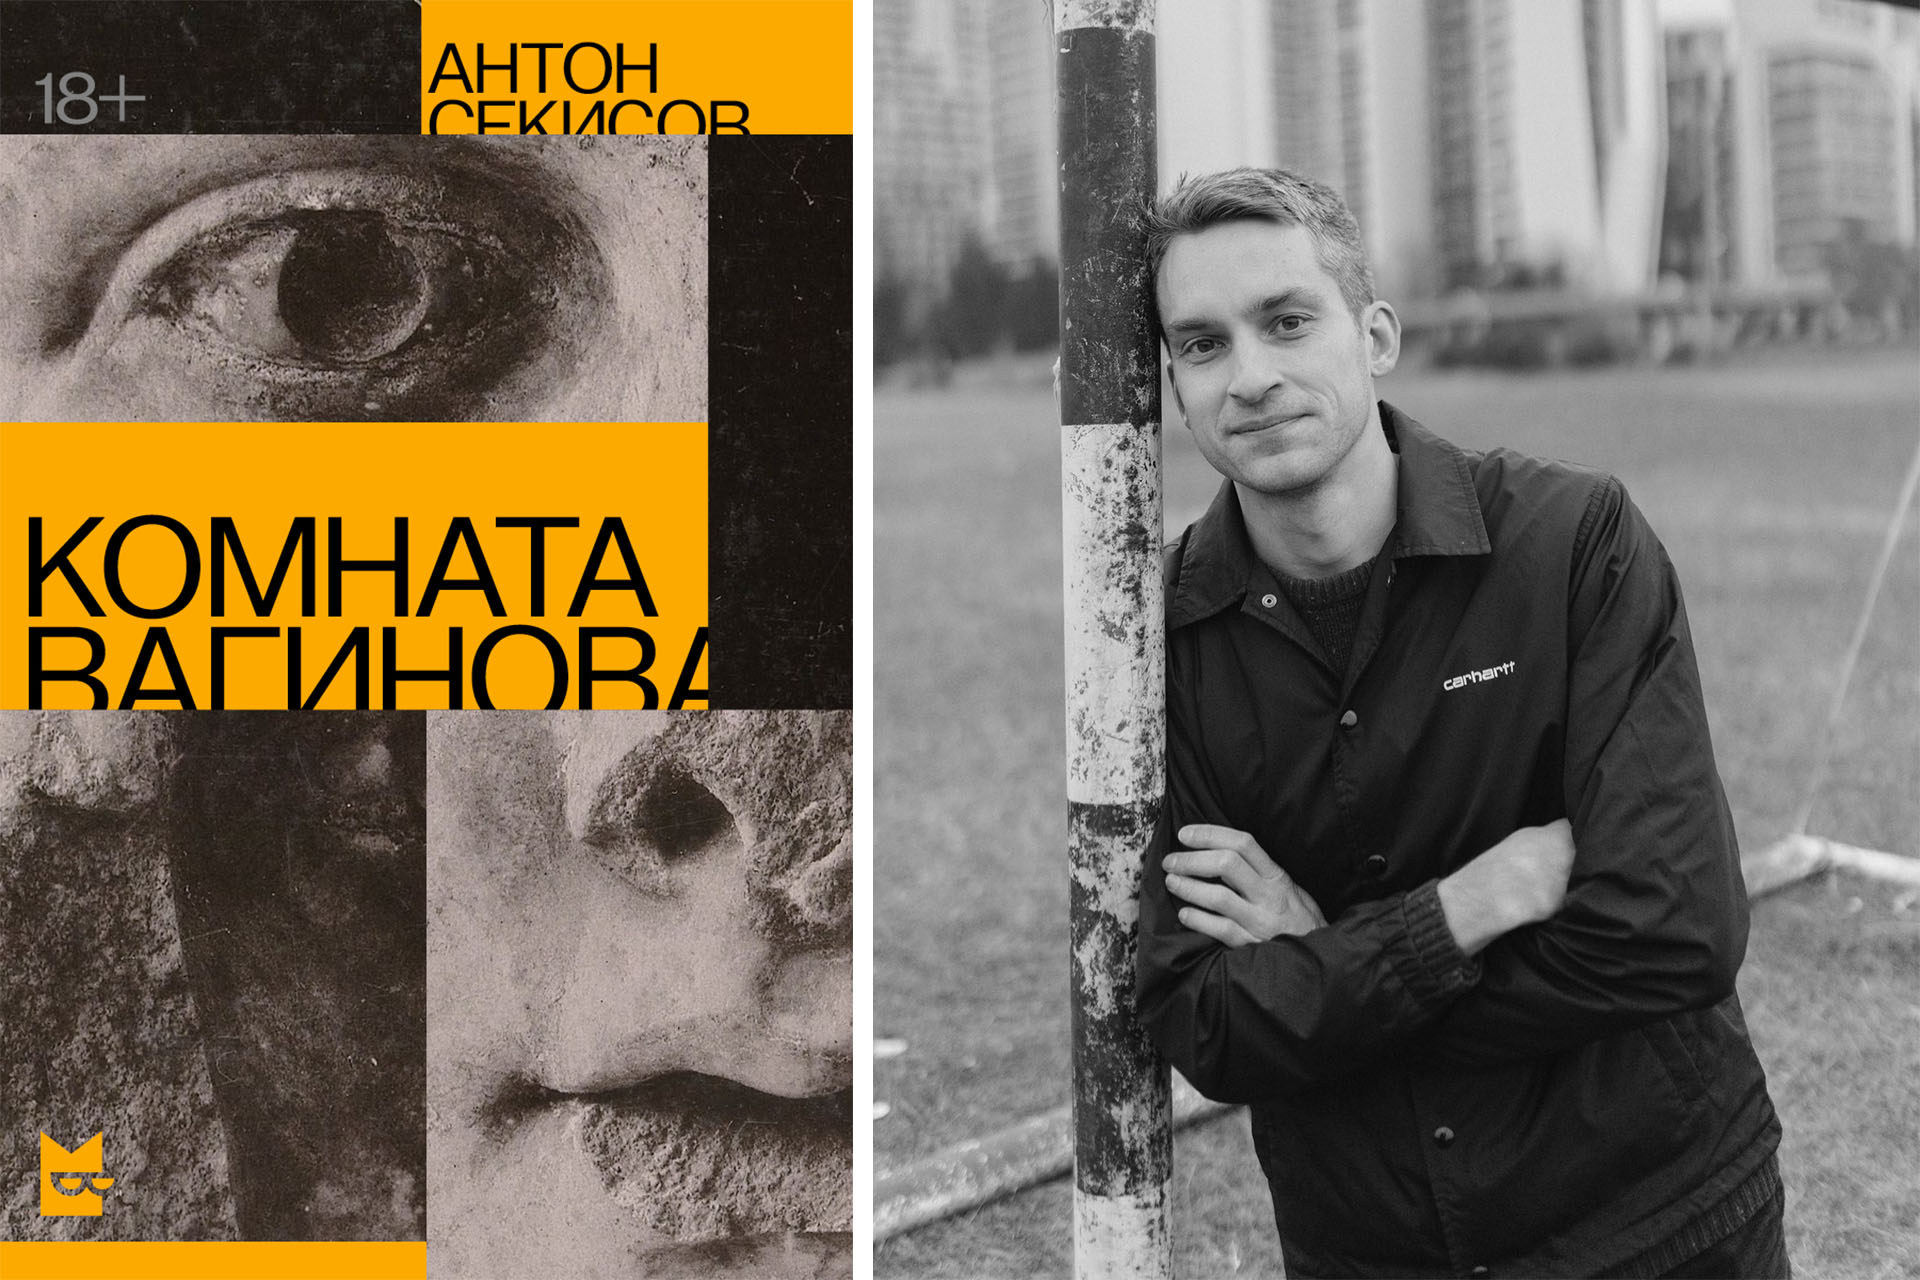 Слева: обложка книжного сериала; справа: Антон Секисов